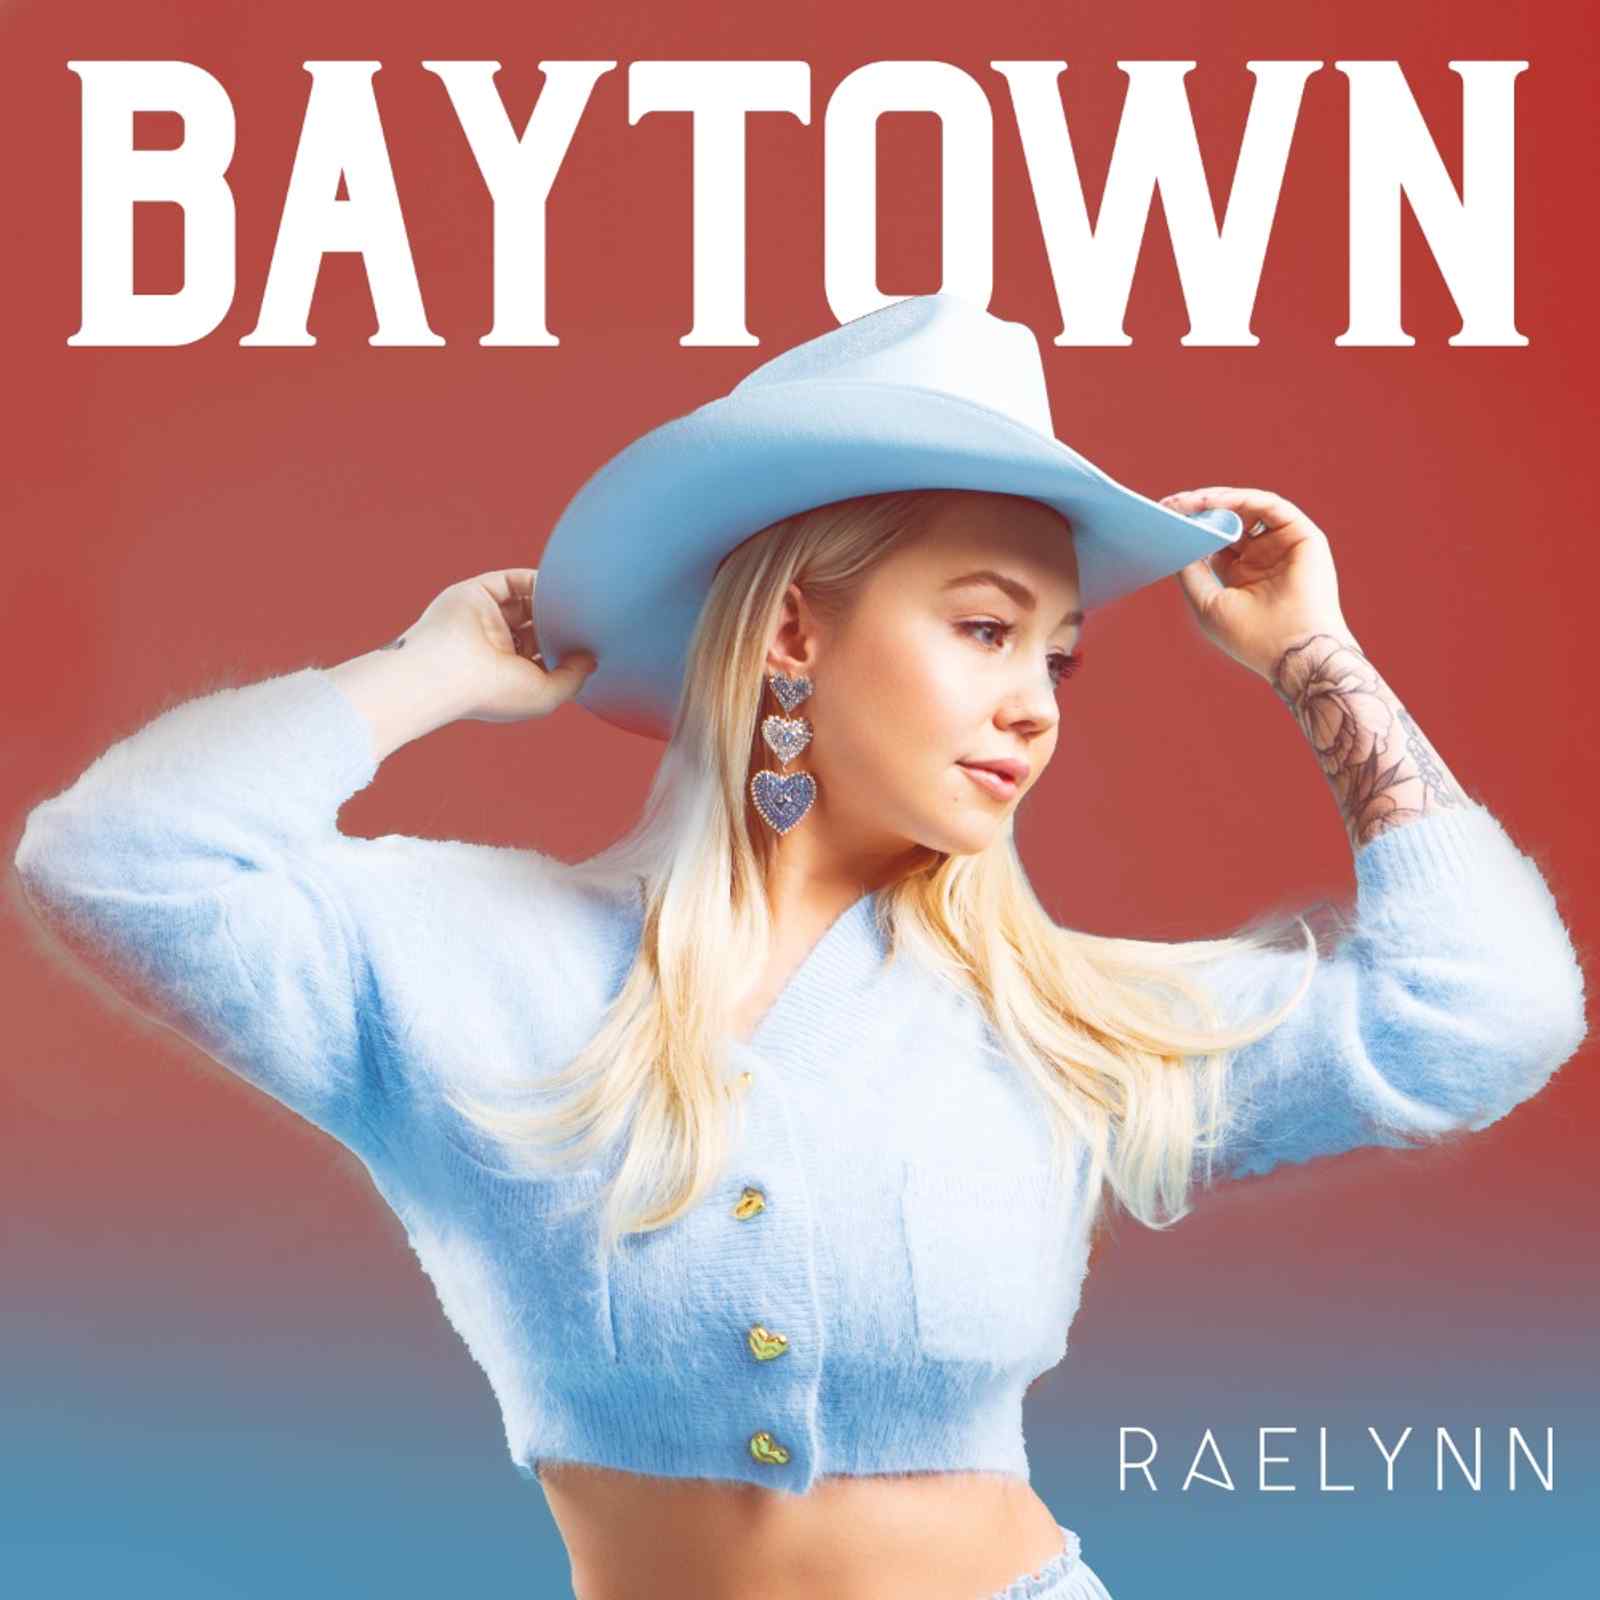 Baytown by RaeLynn